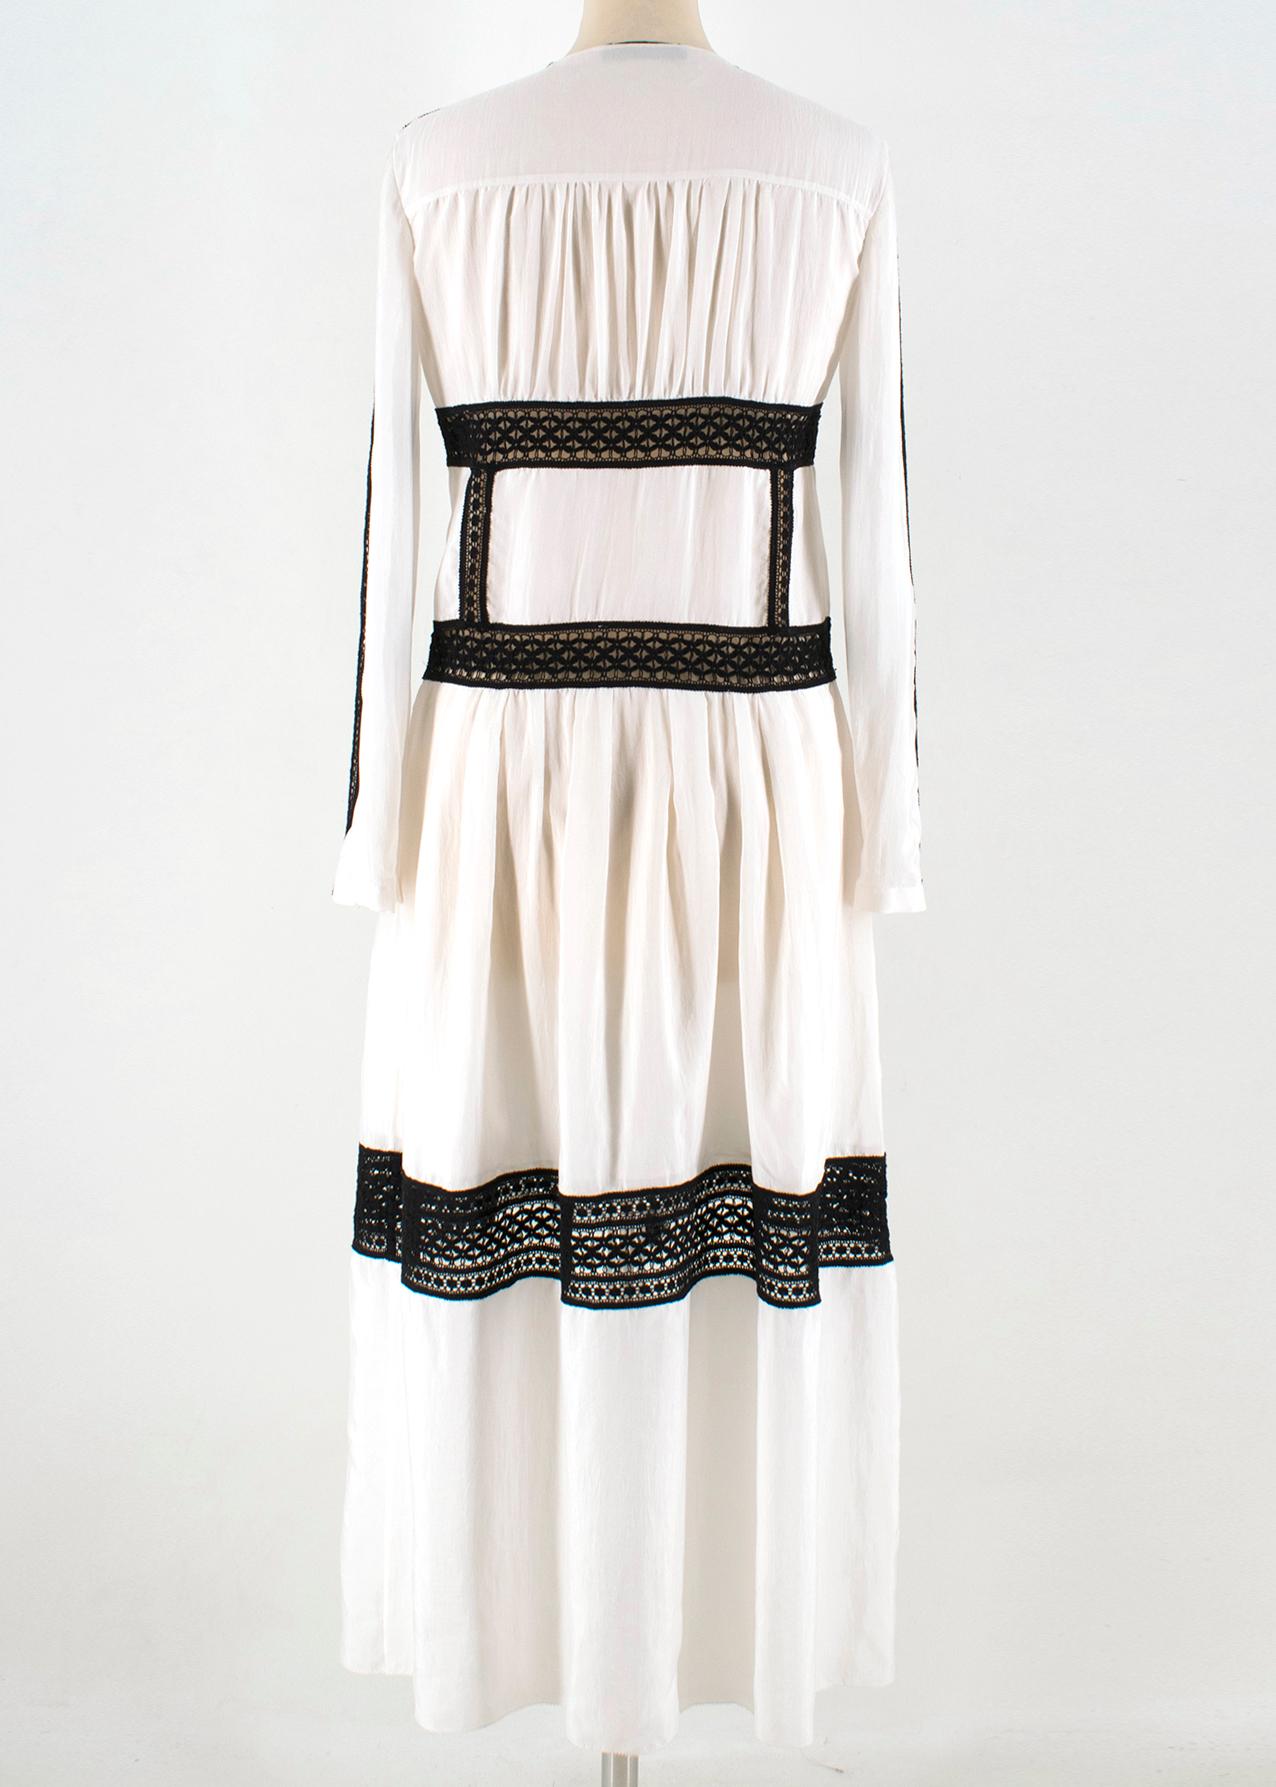 burberry prorsum lace dress